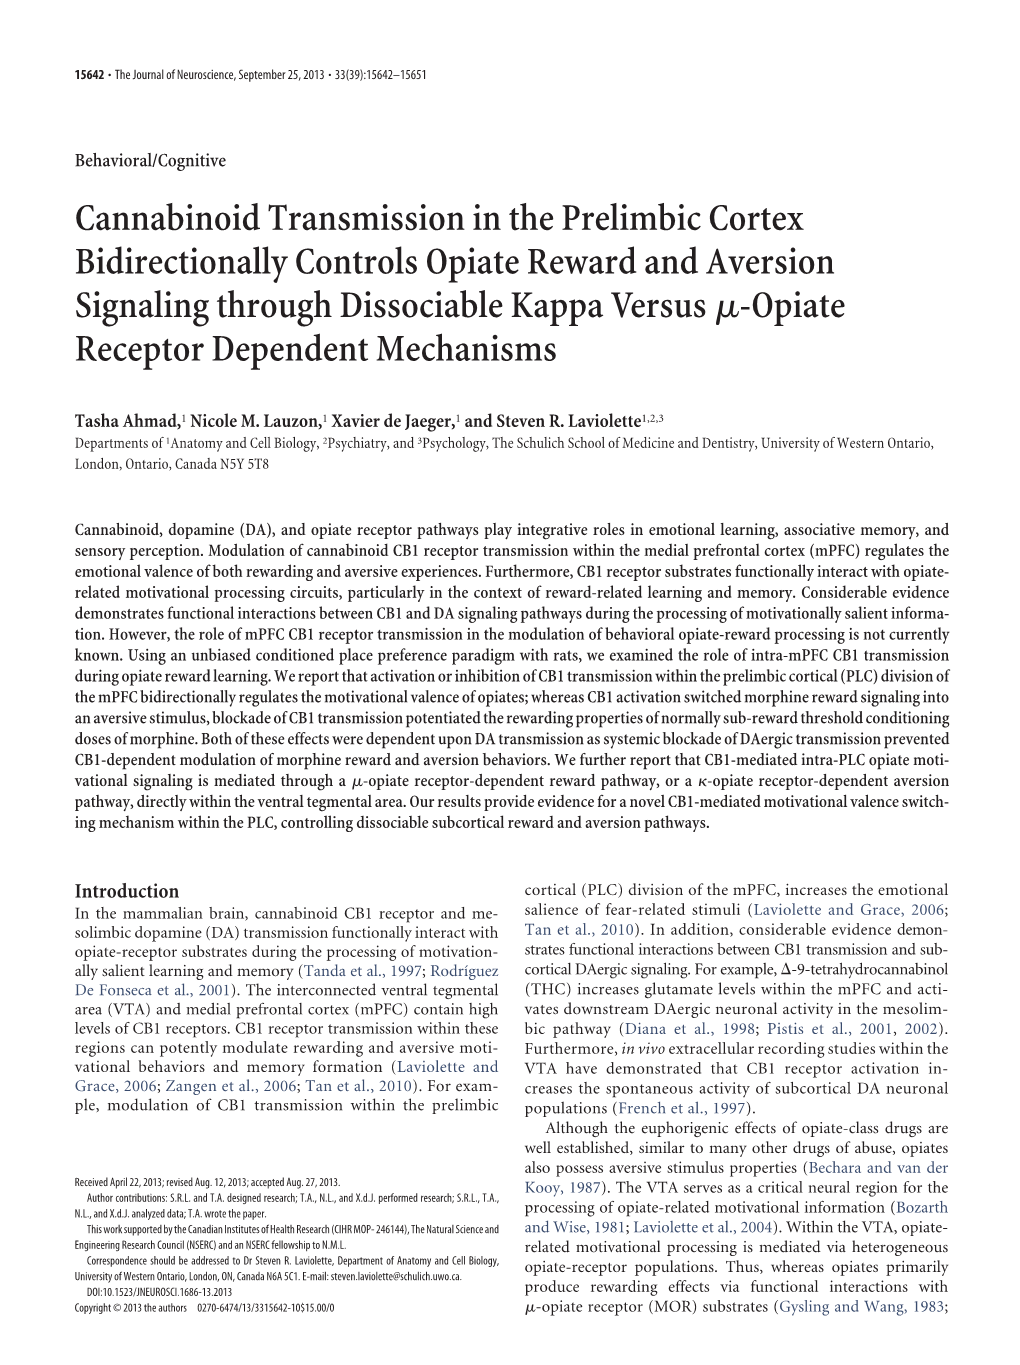 Cannabinoid Transmission in the Prelimbic Cortex Bidirectionally